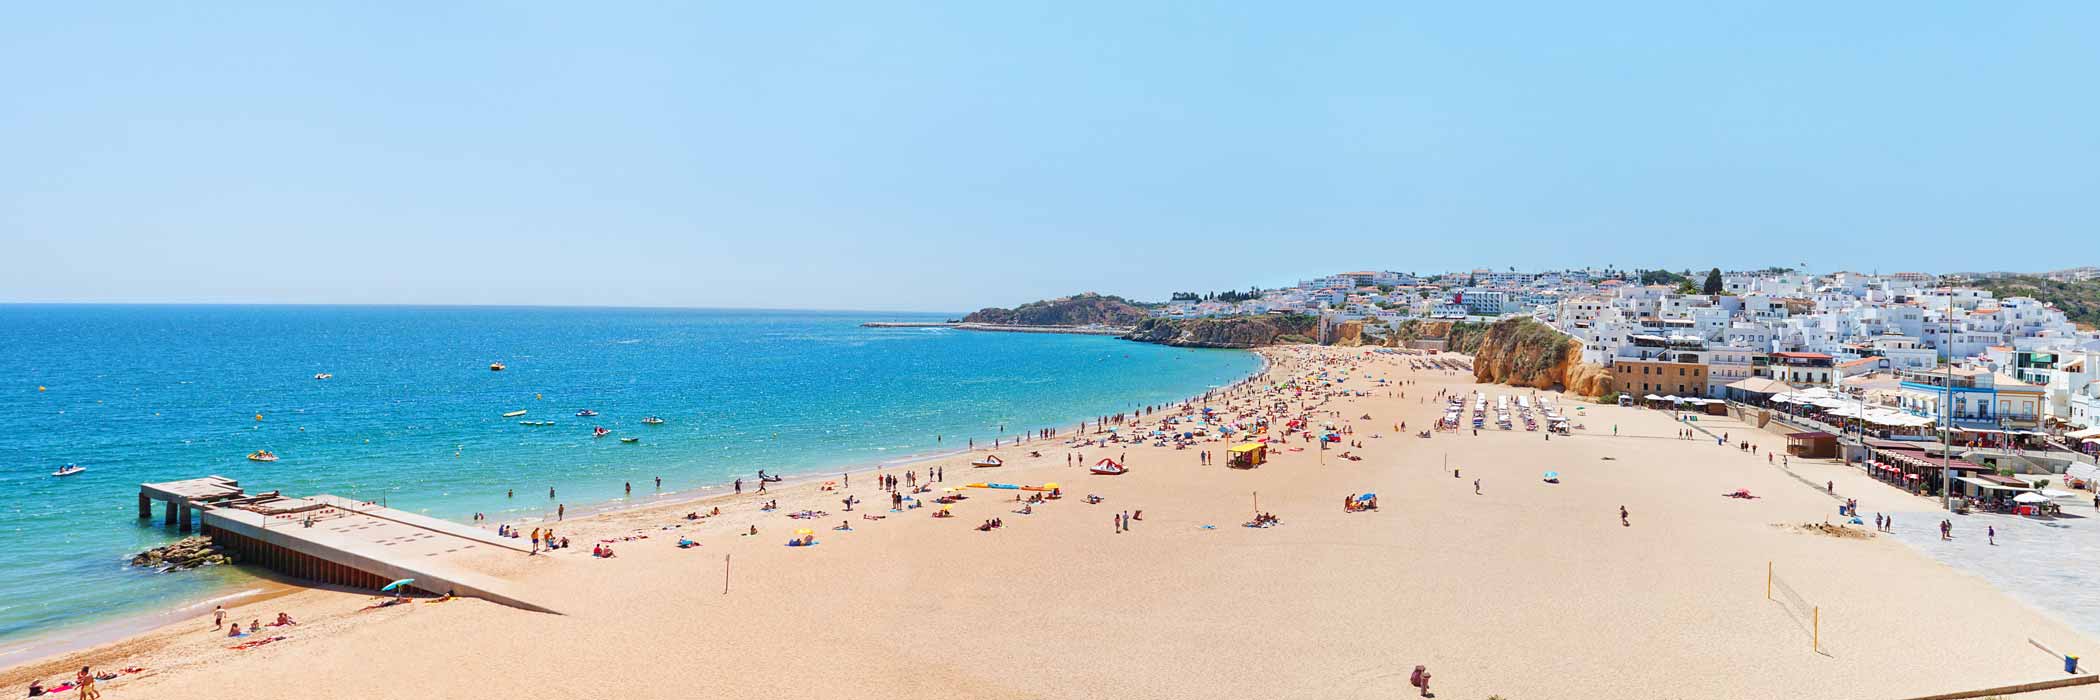 Algarve Holidays under £100